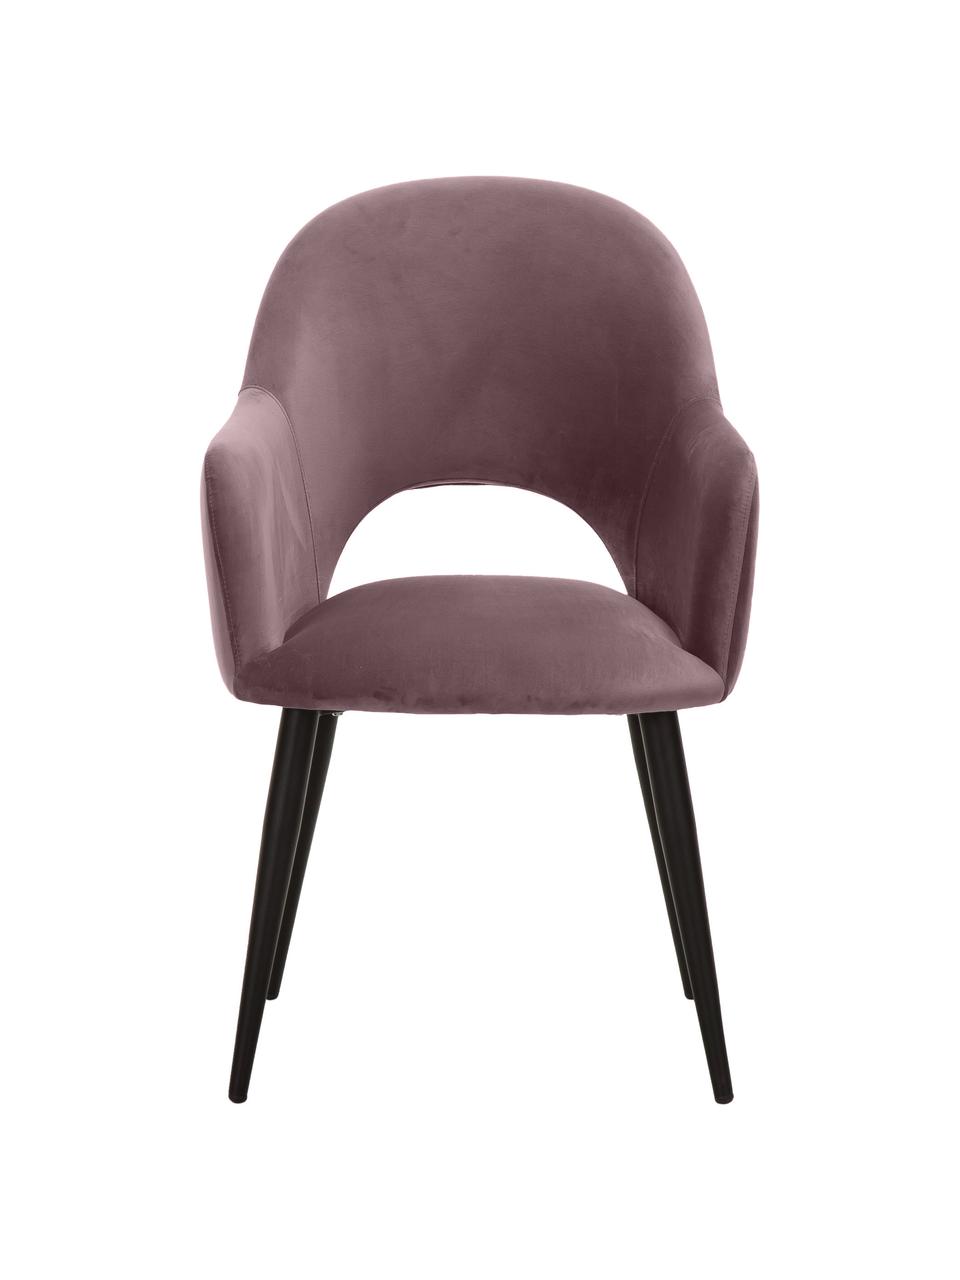 Sametová židle s područkami Rachel, Růžová, Š 56 cm, H 70 cm